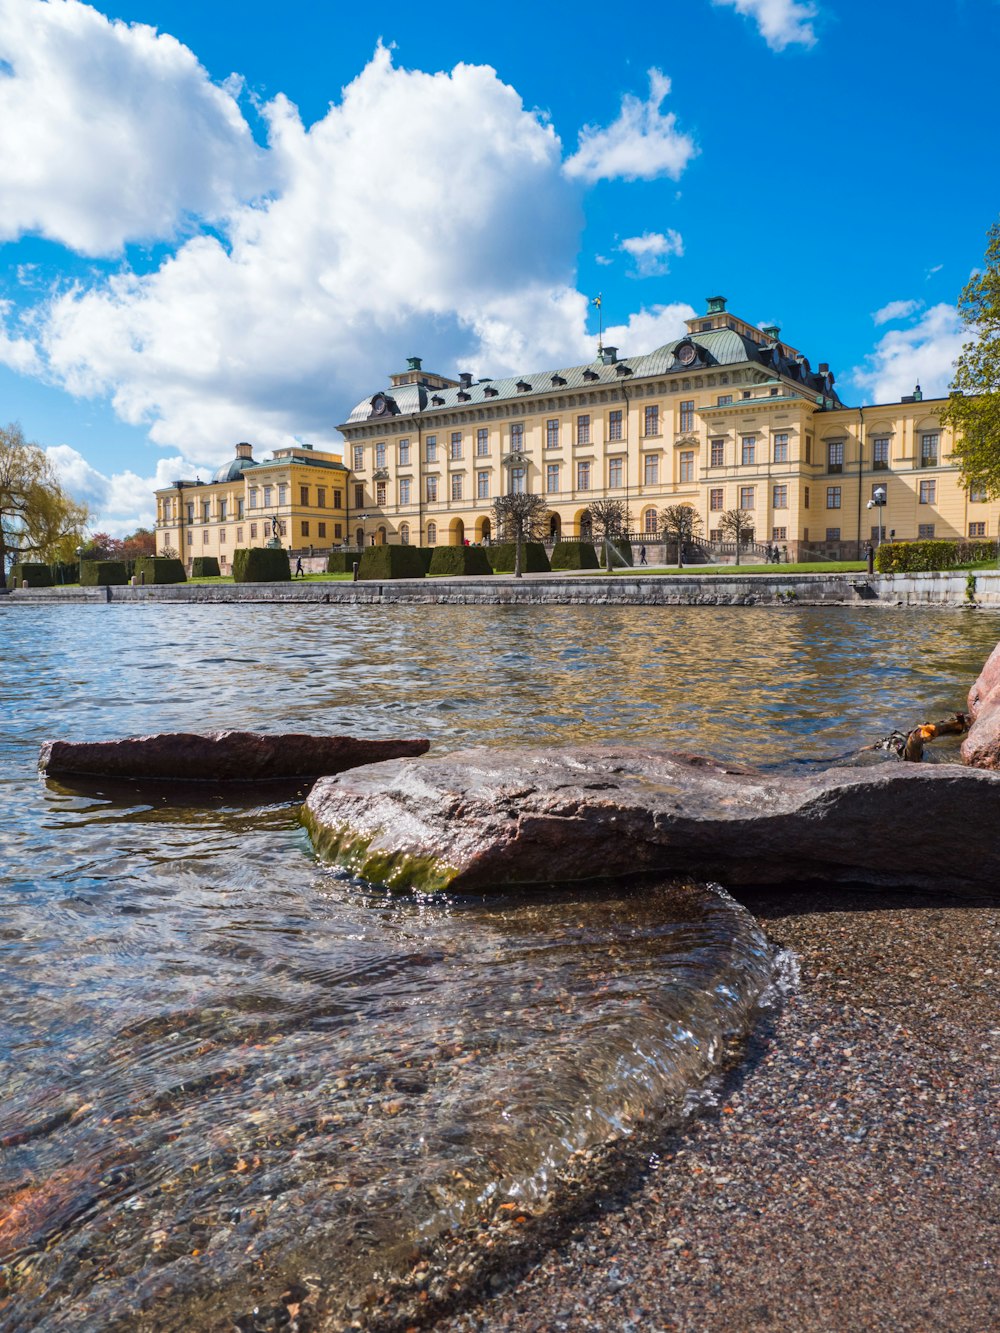 Drottningholm Palace in Sweden under white and blue sky